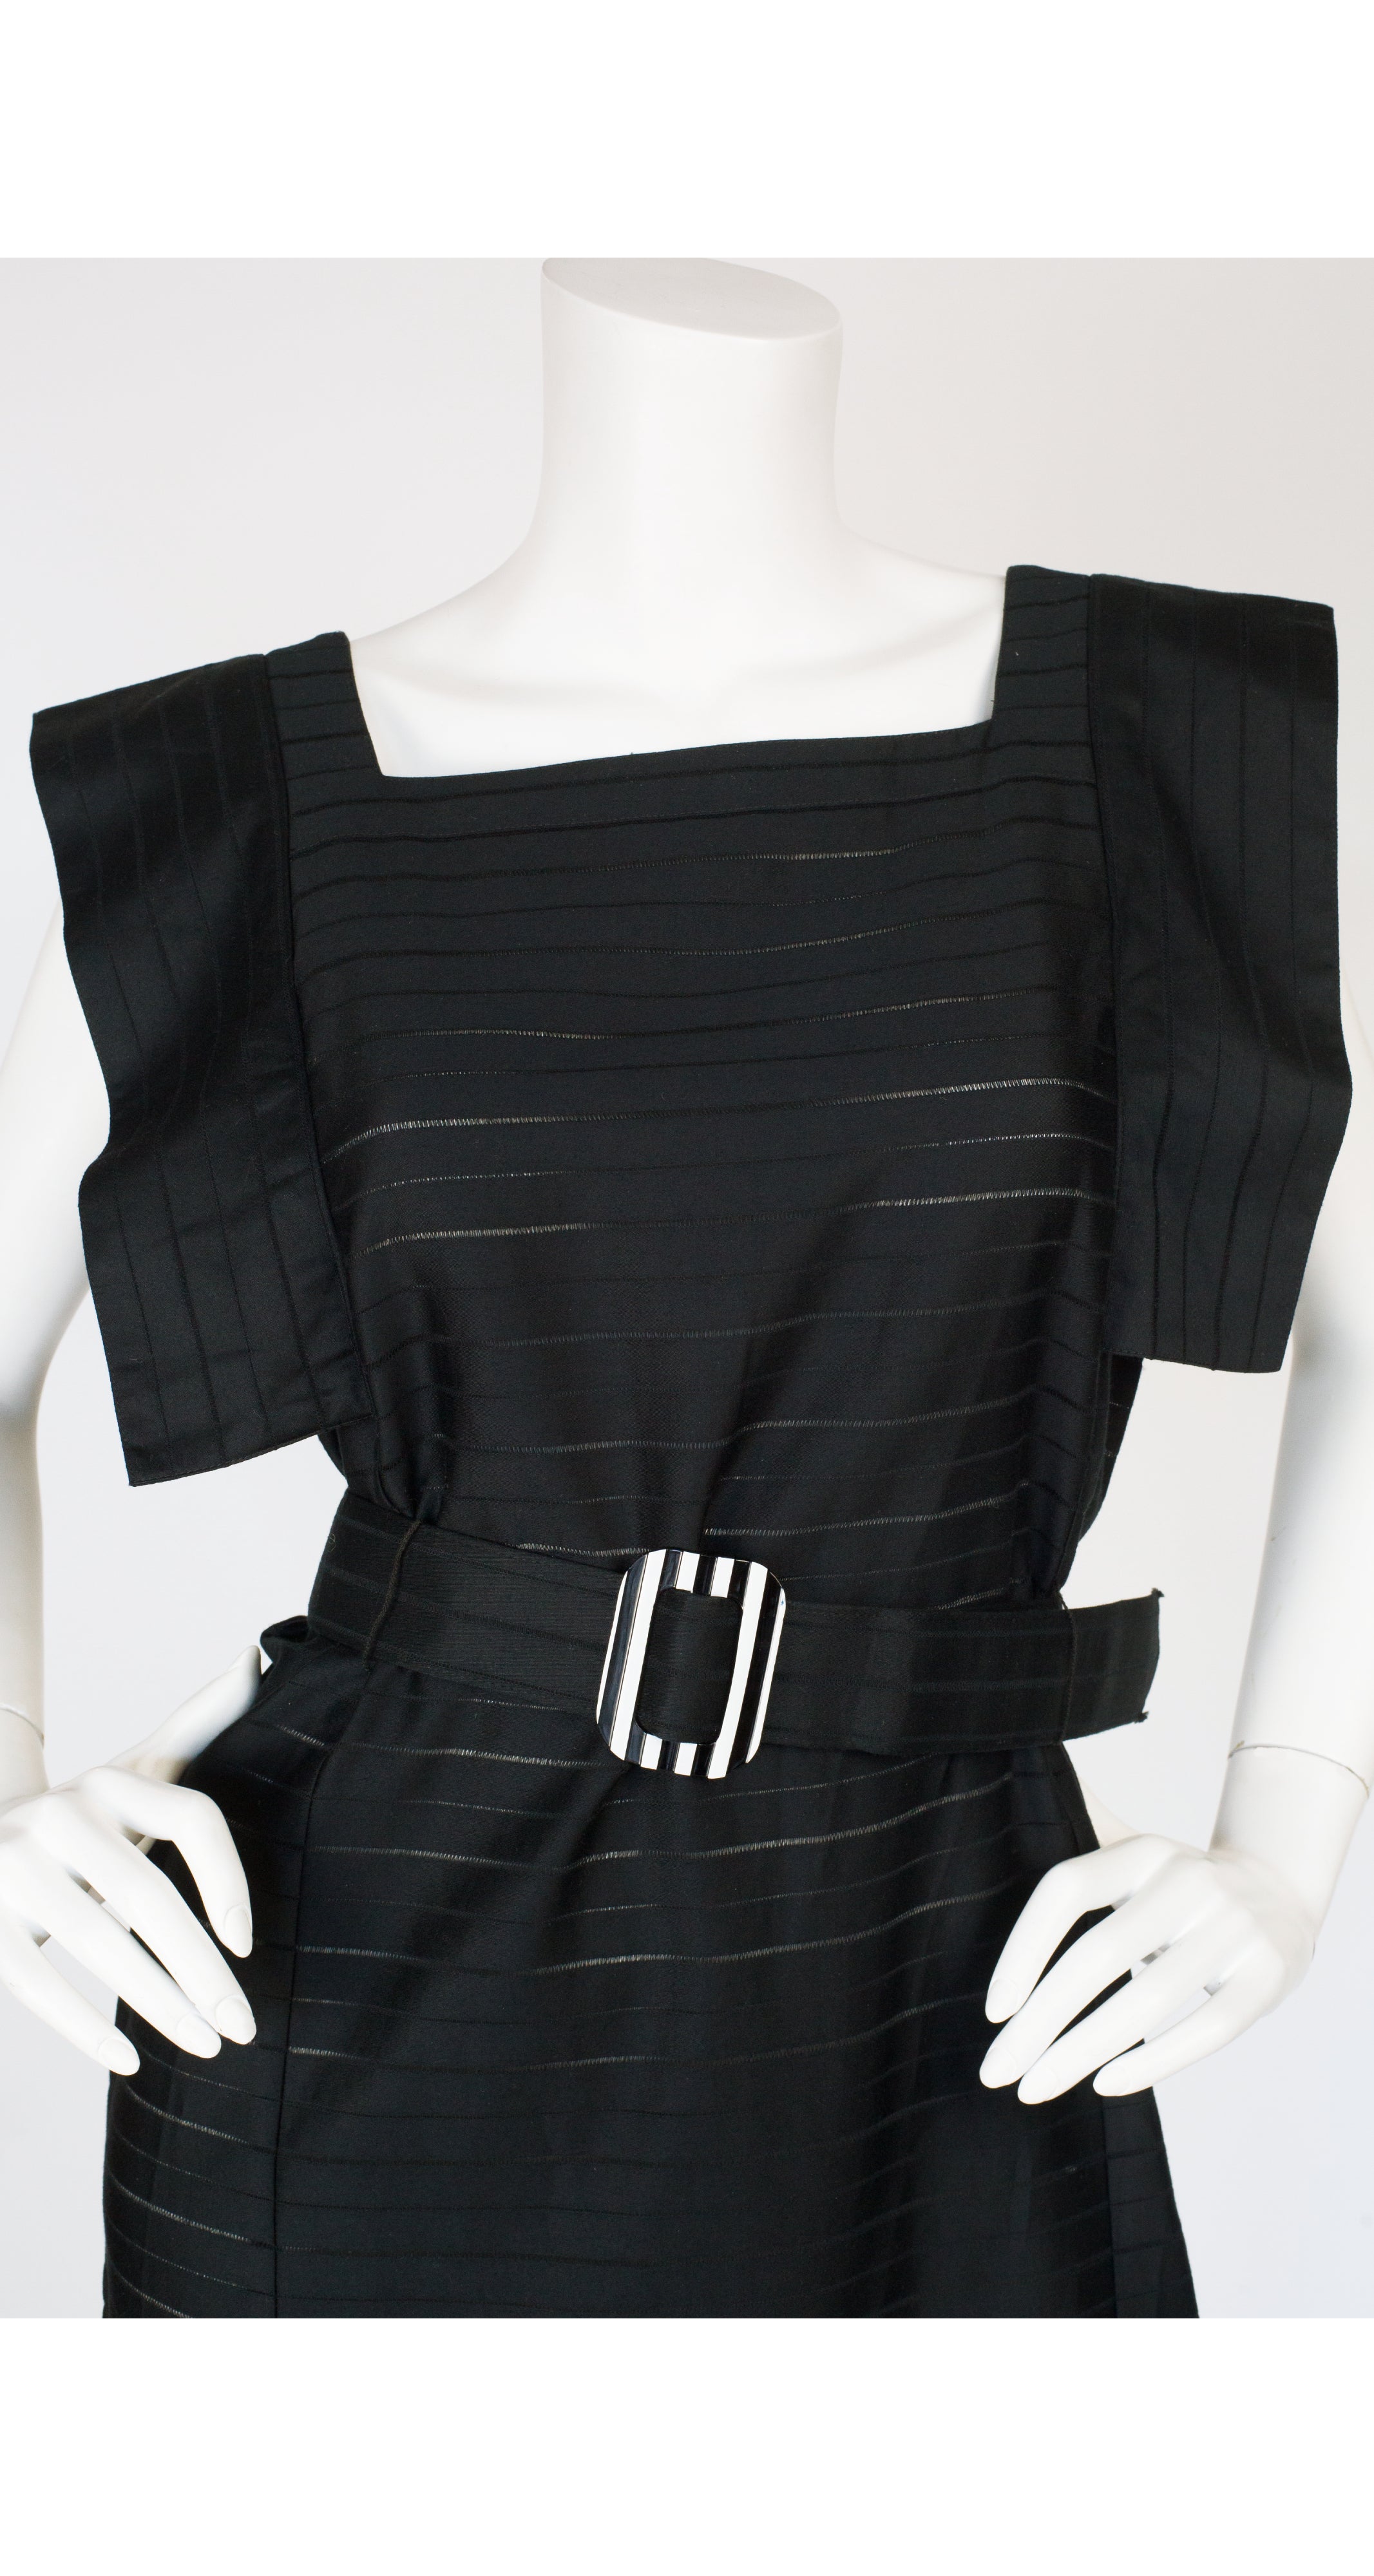 1980s Space Age Style Black Cotton Dress